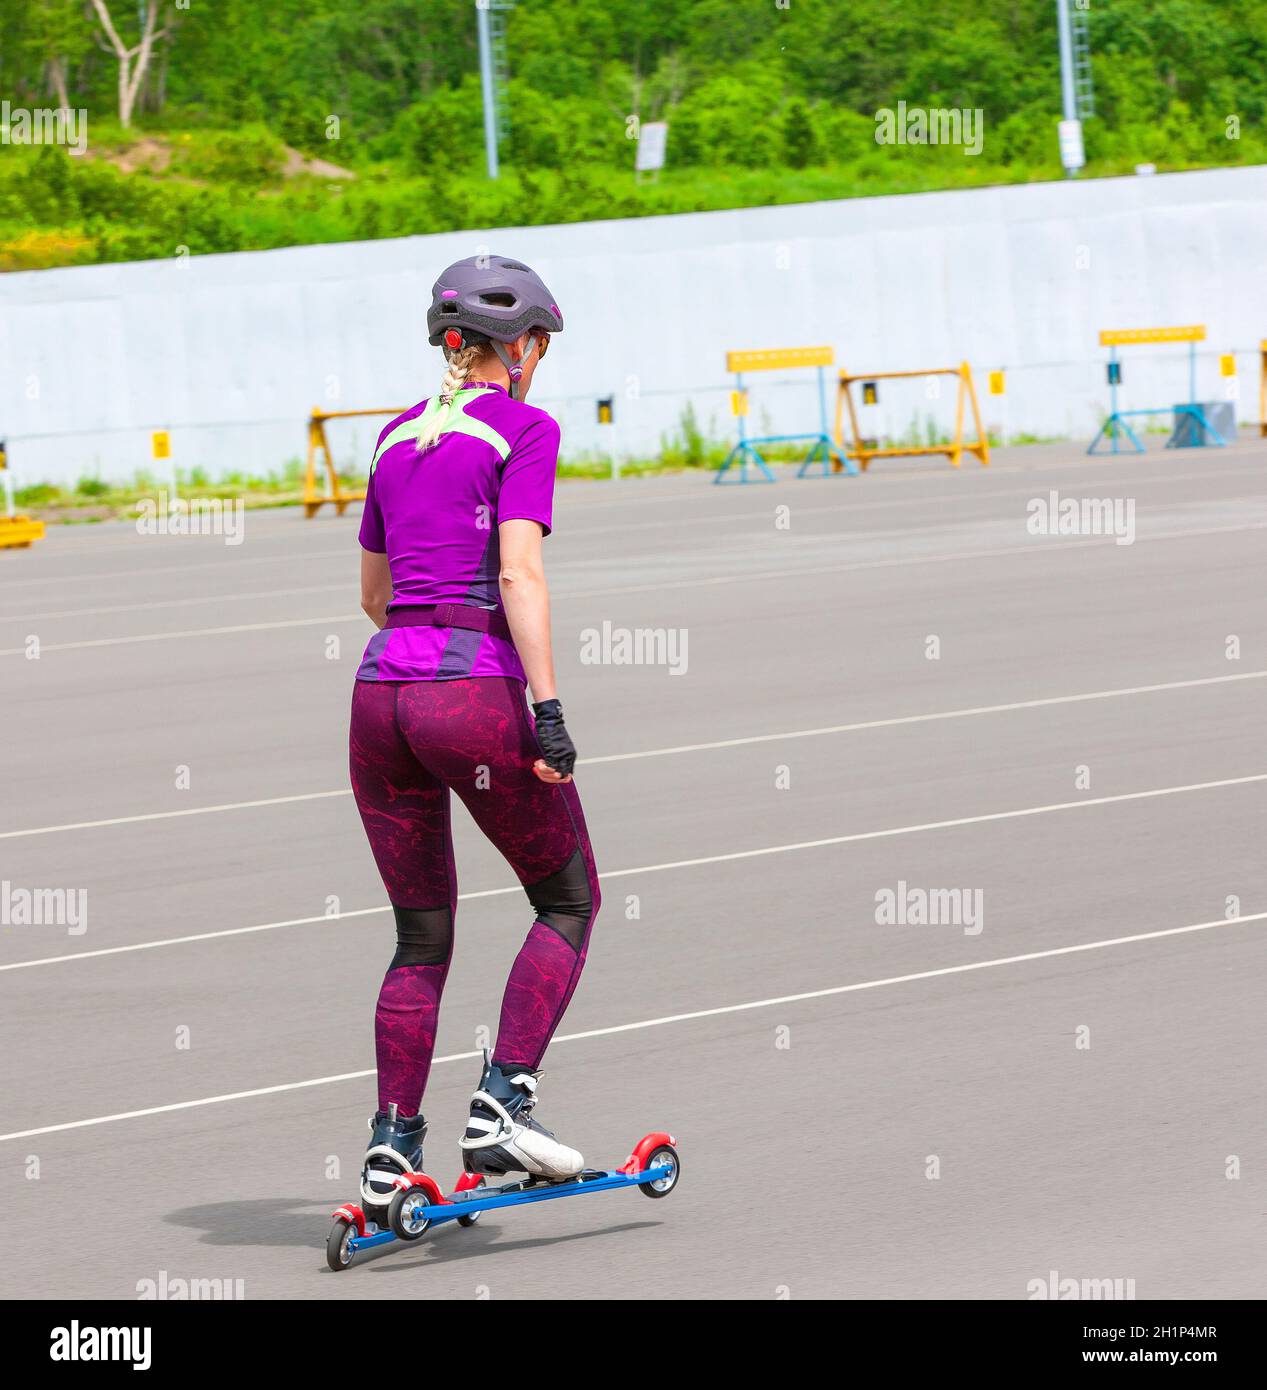 The girl sportswoman rides on the roller skis on the asphalt Stock Photo